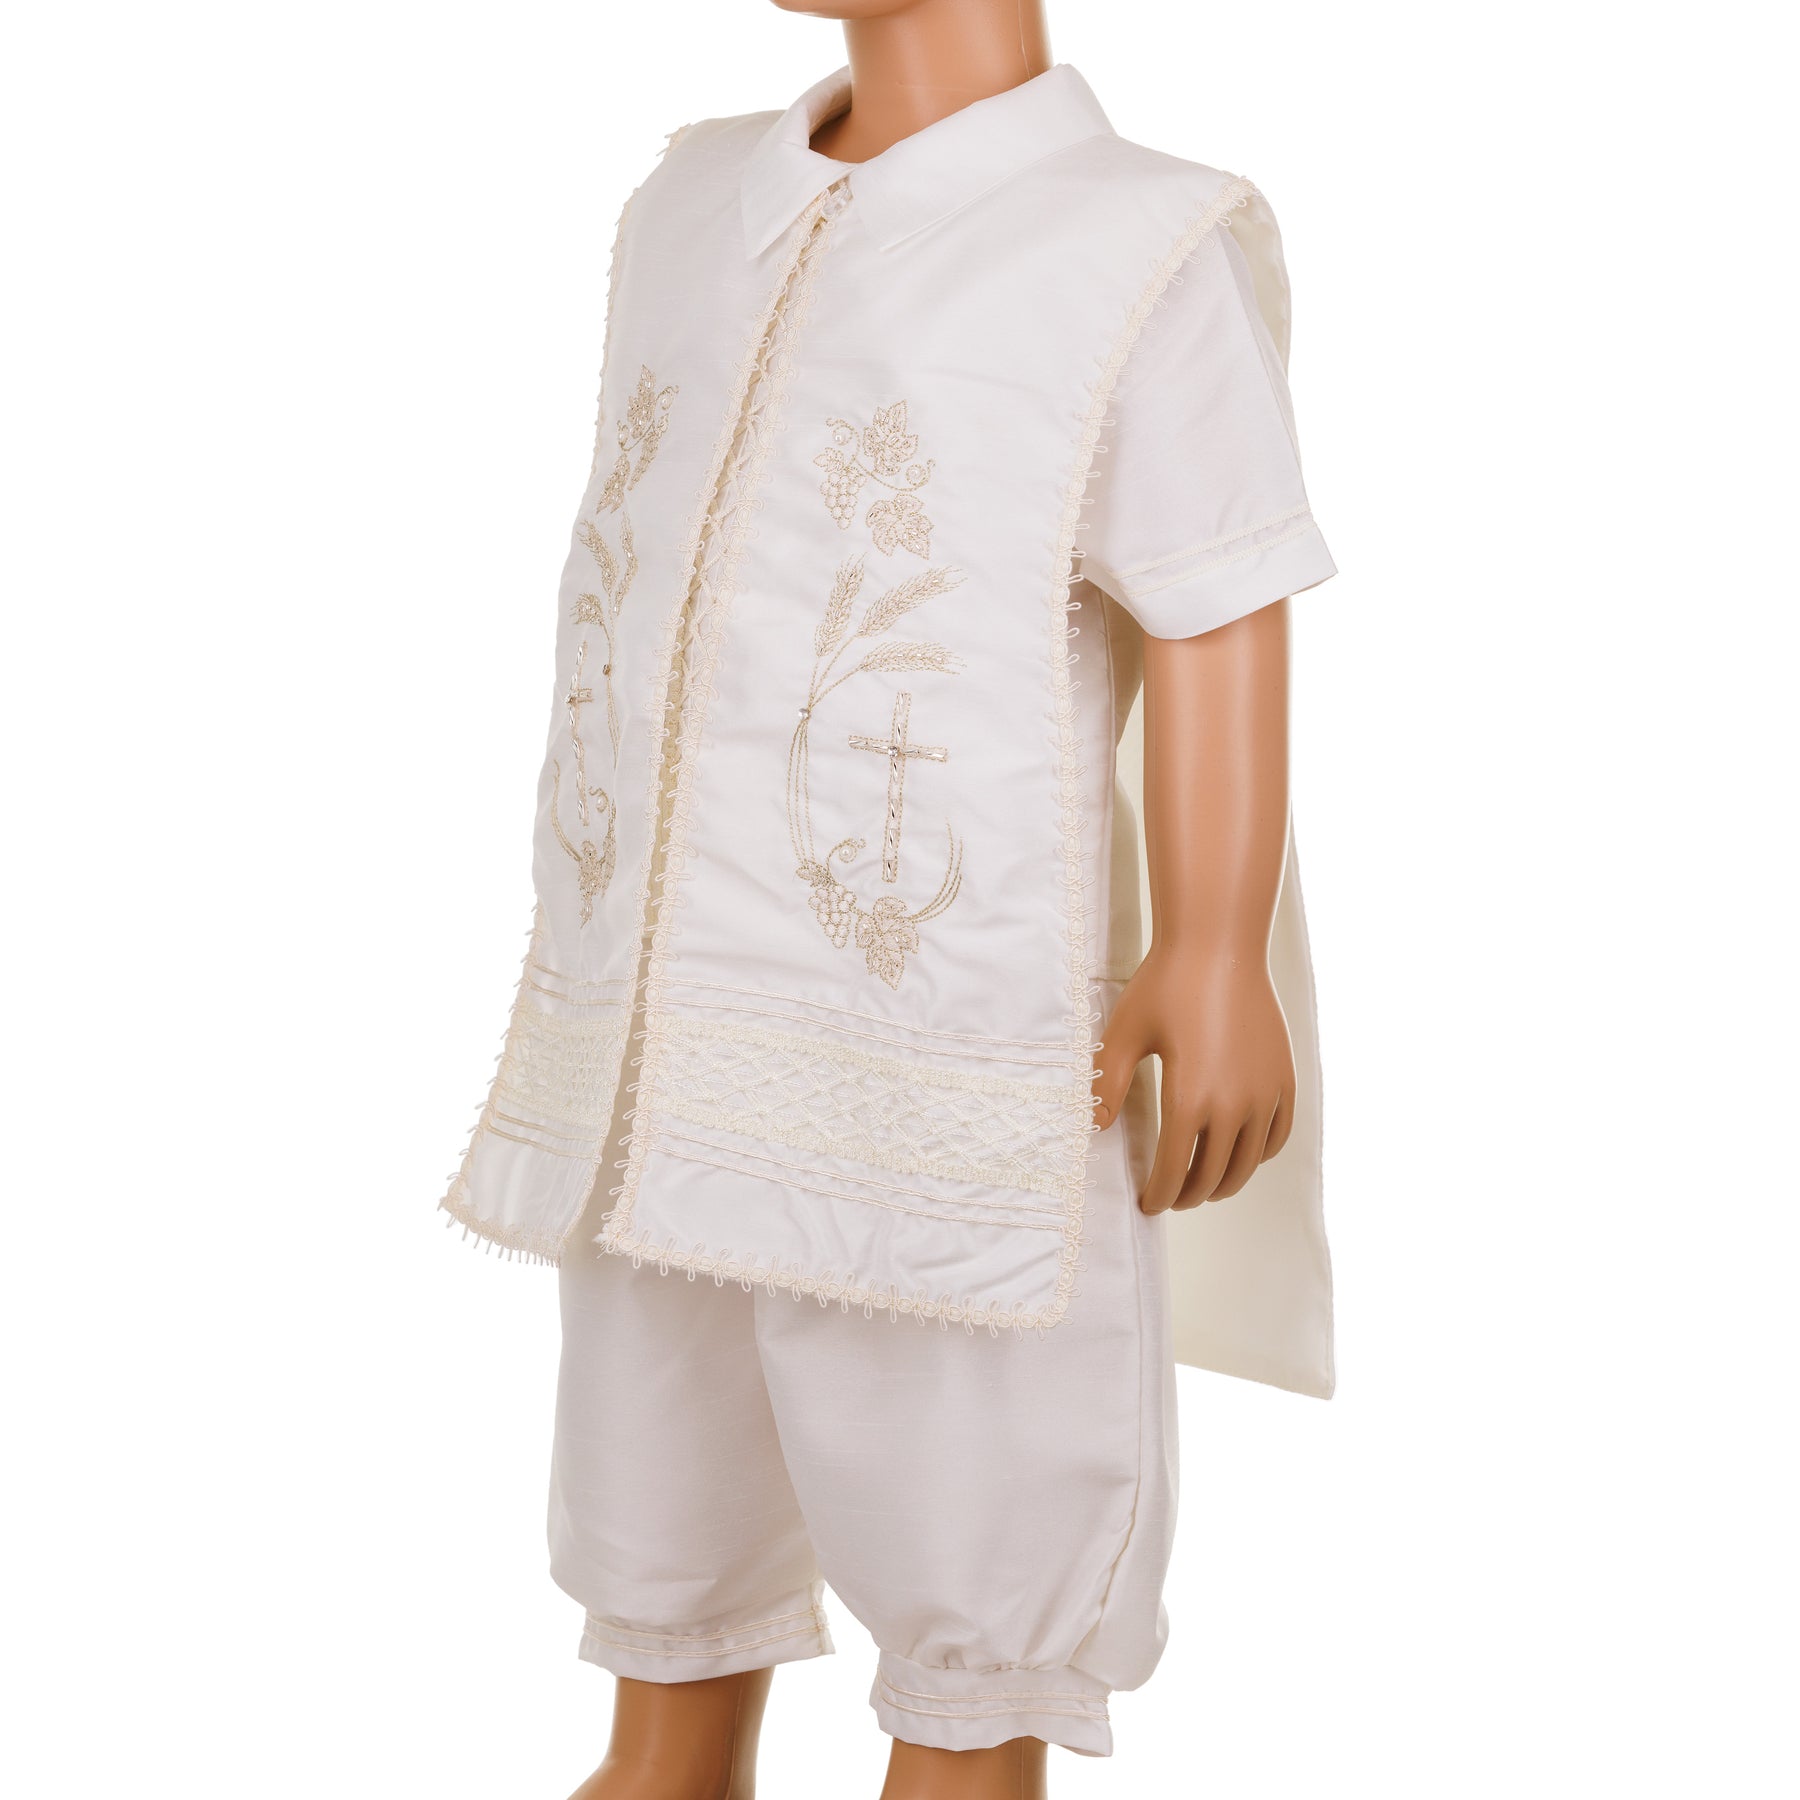 Boys Baptism Outfit, 4 Piece Christening Set, Traje de Bautizo - 802